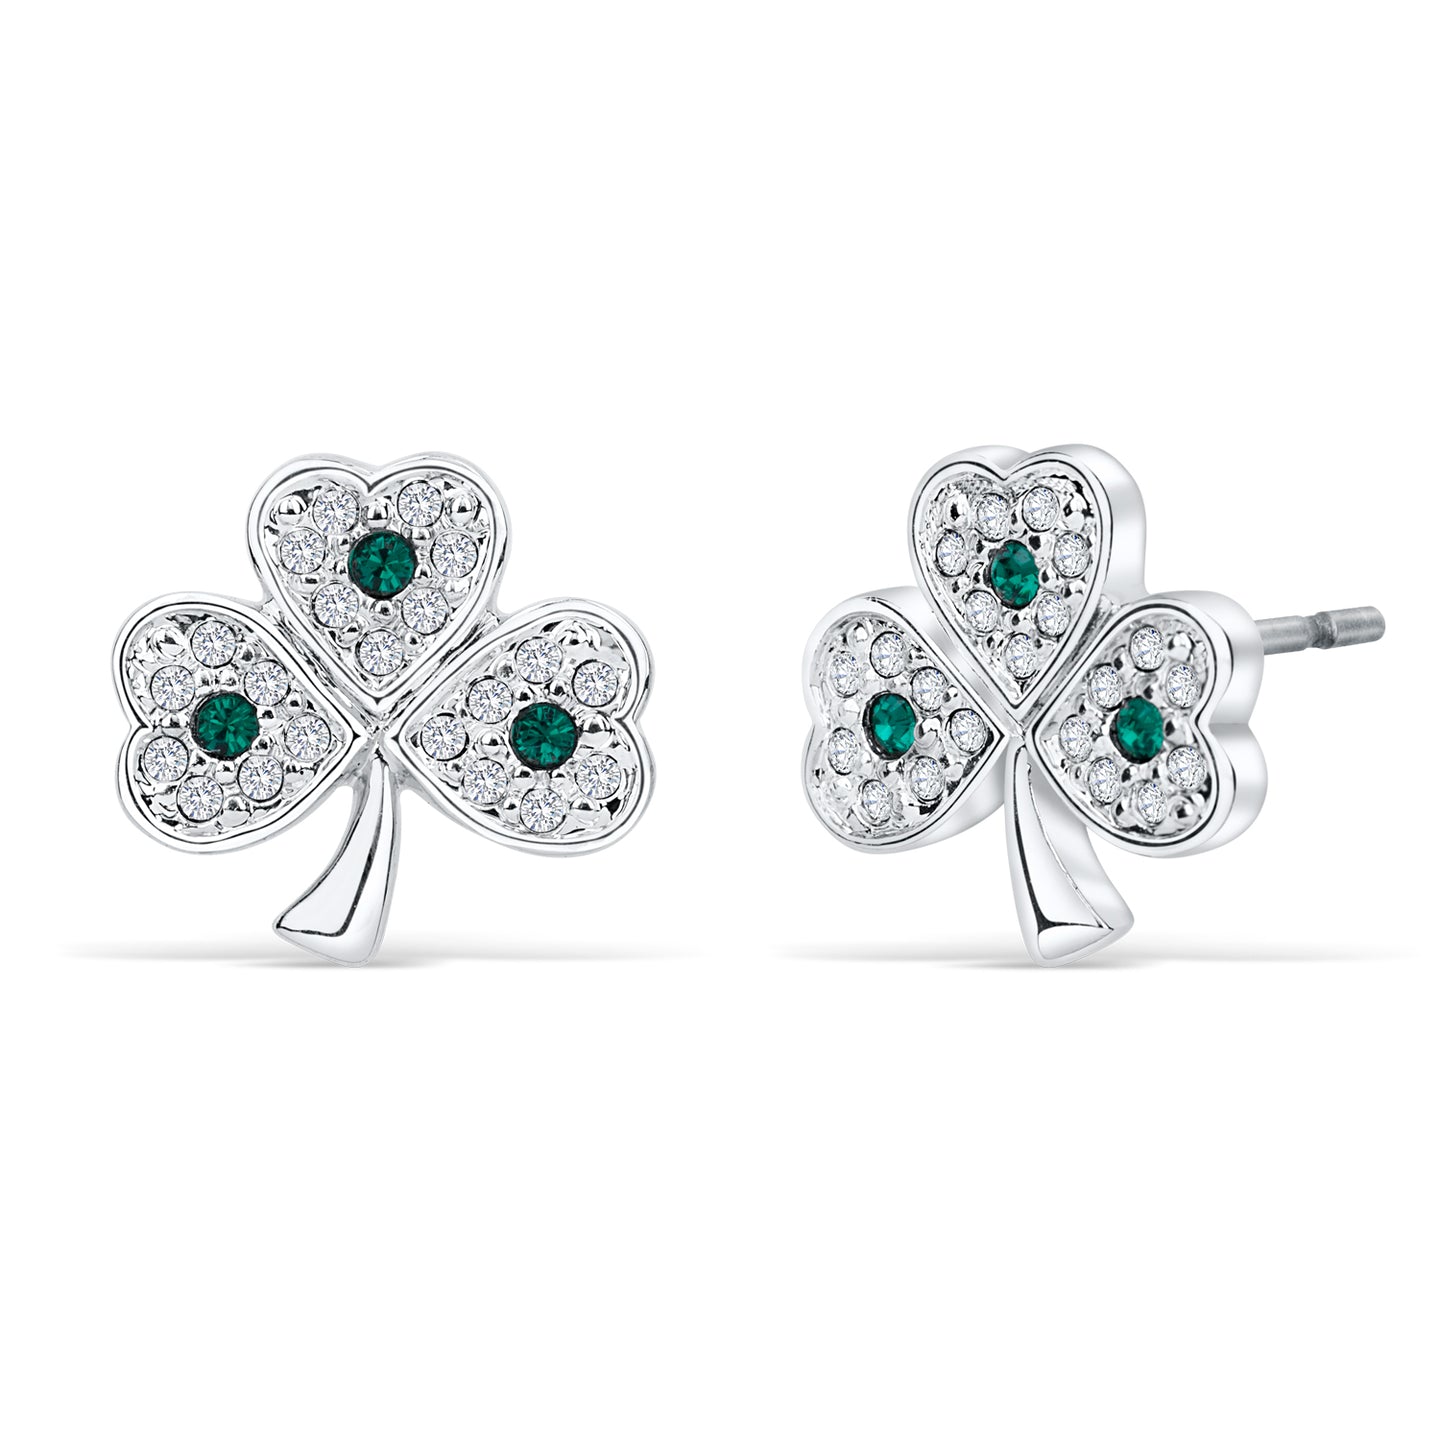 Shamrock Post Earrings with Emerald Crystal